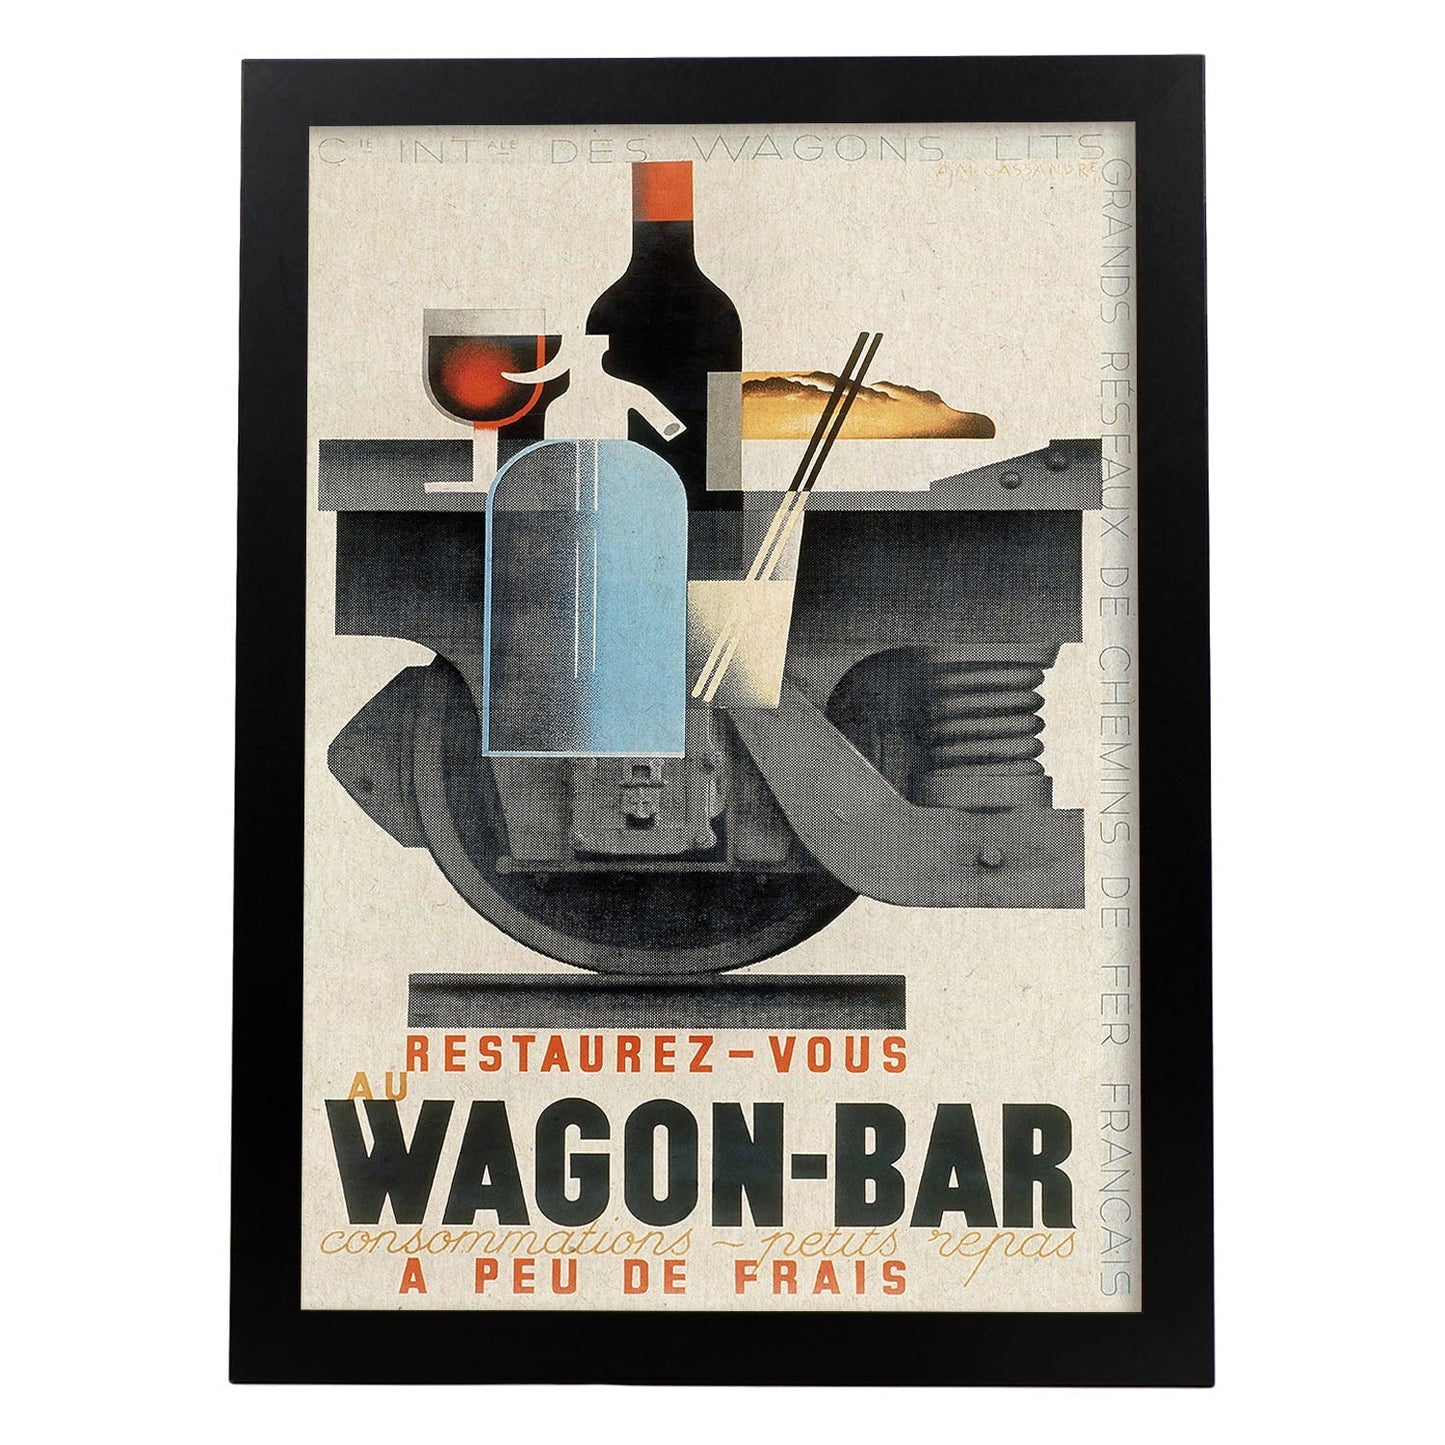 Poster vintage. Cartel vintage anuncio Wagon-Bar a Peu de Frais.-Artwork-Nacnic-A3-Marco Negro-Nacnic Estudio SL